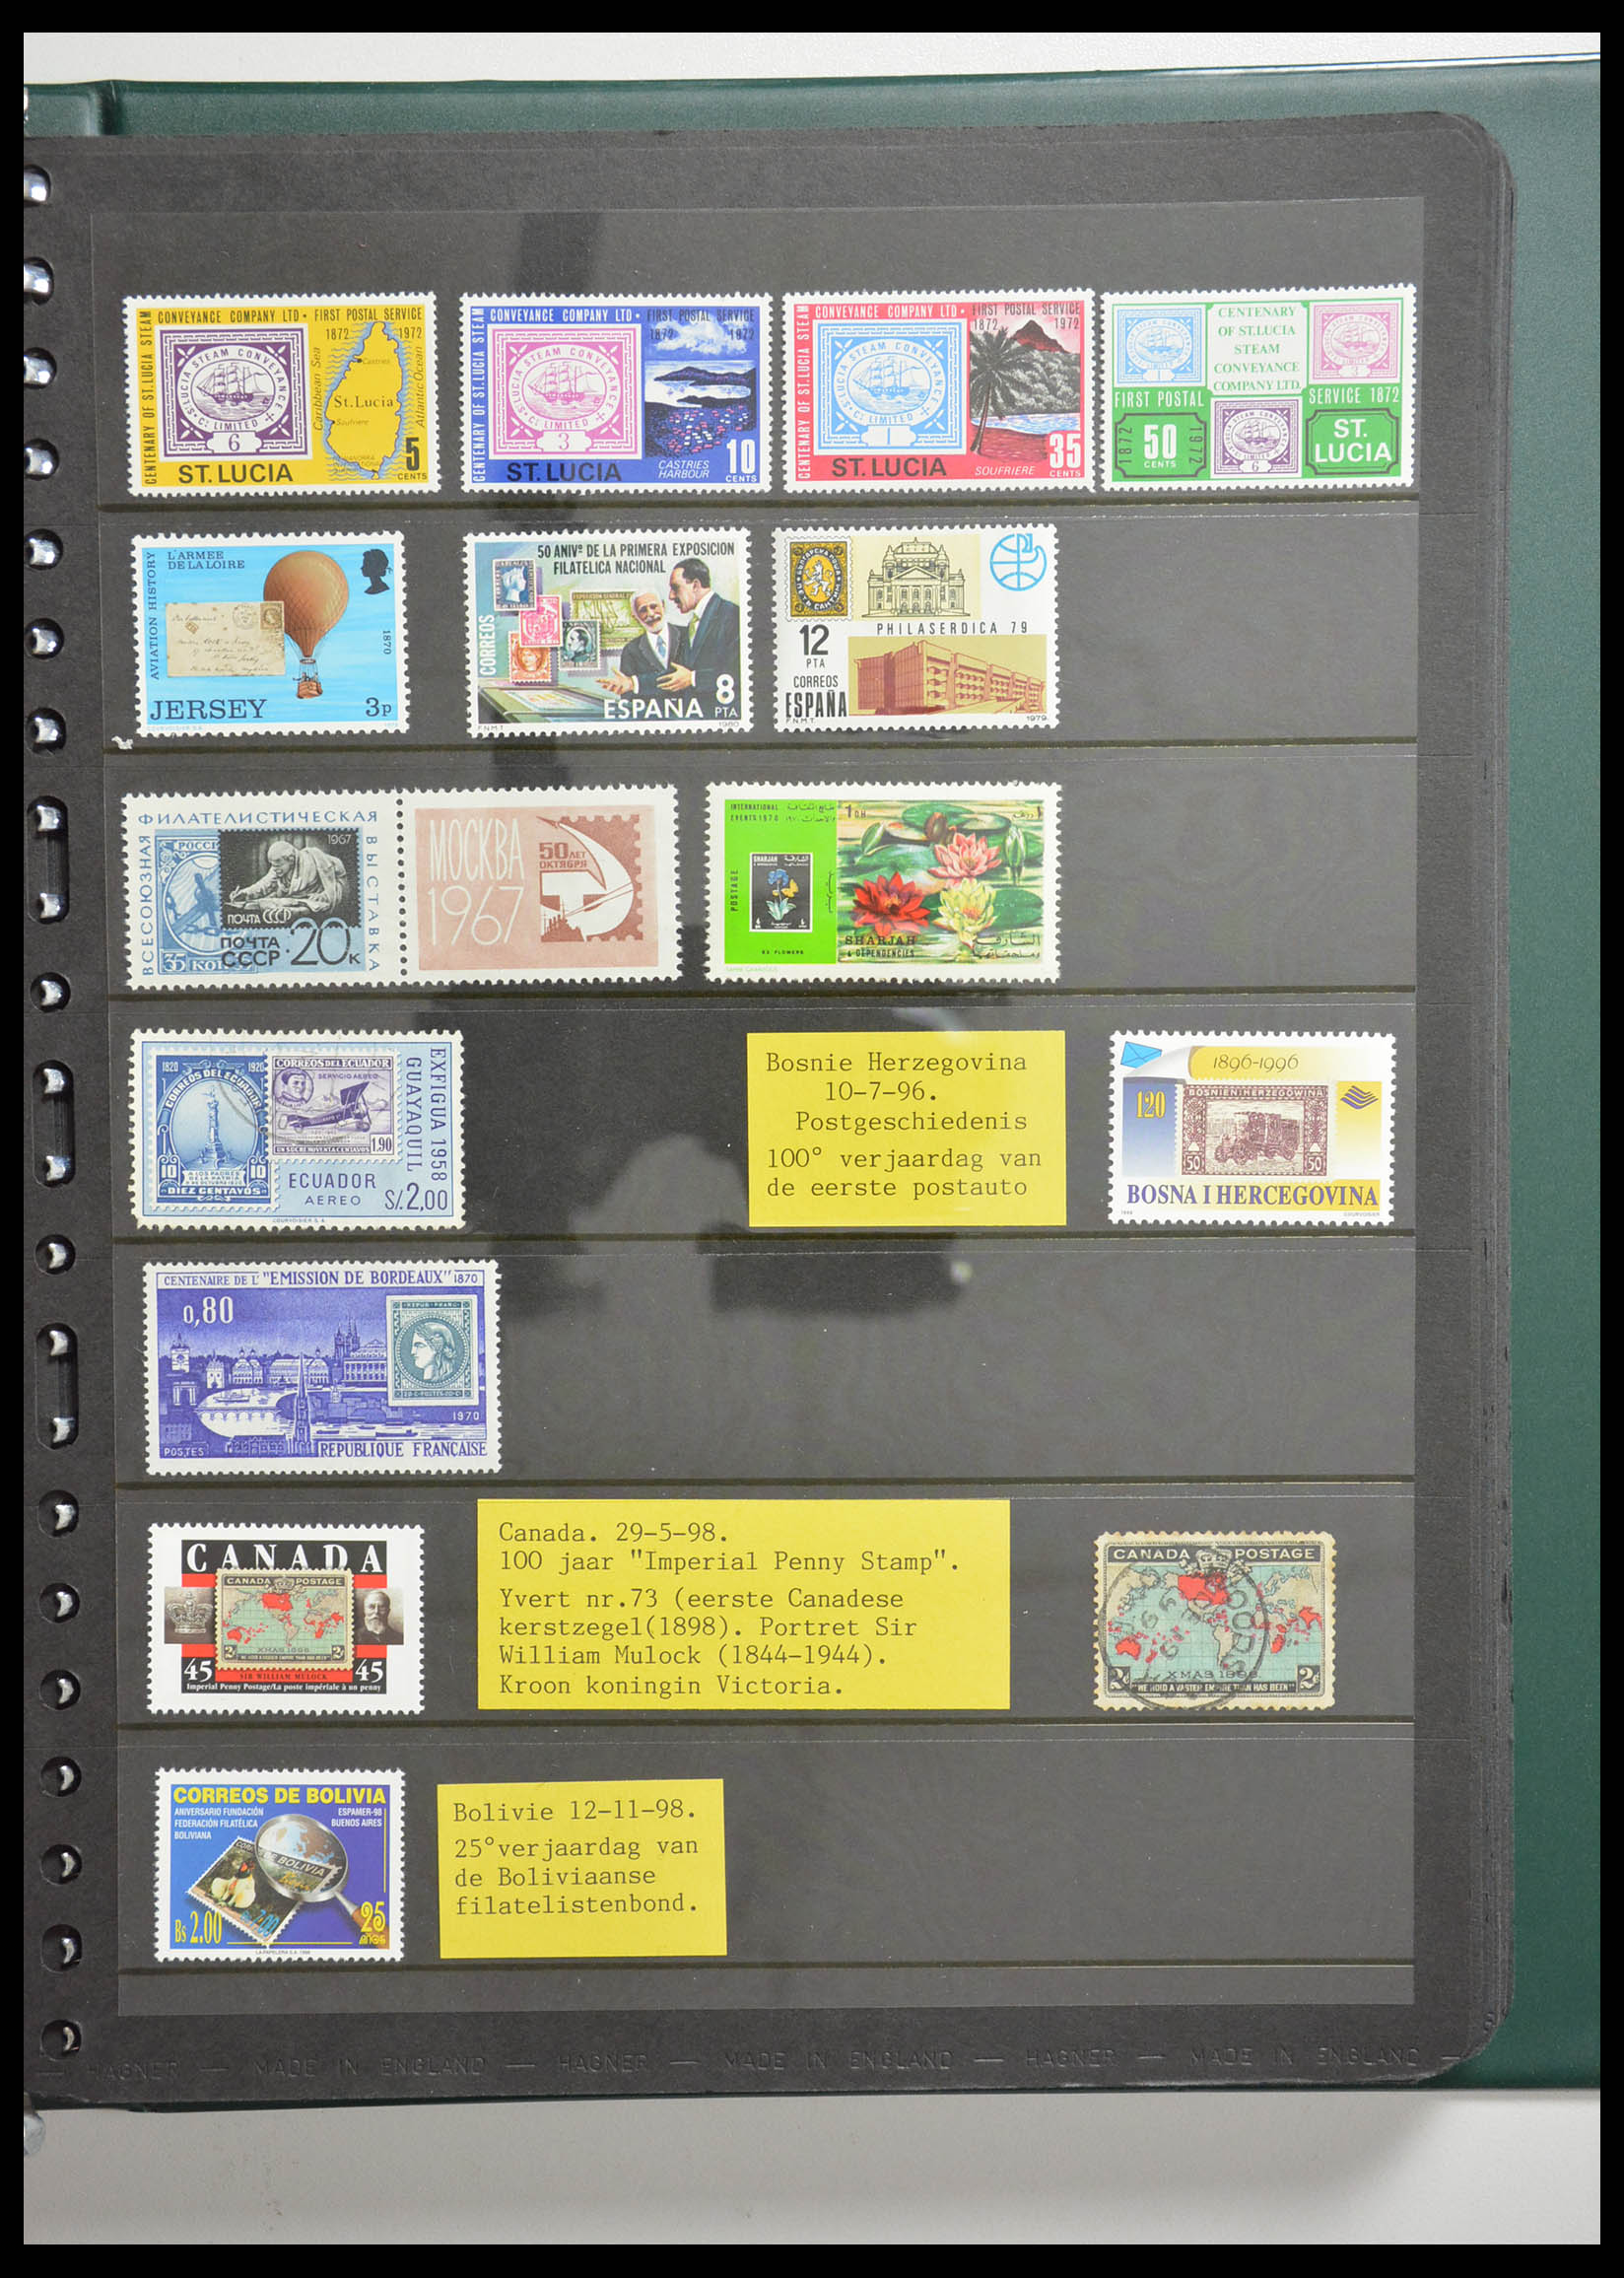 28337 011 - 28337 Postzegel op postzegel 1840-2001.